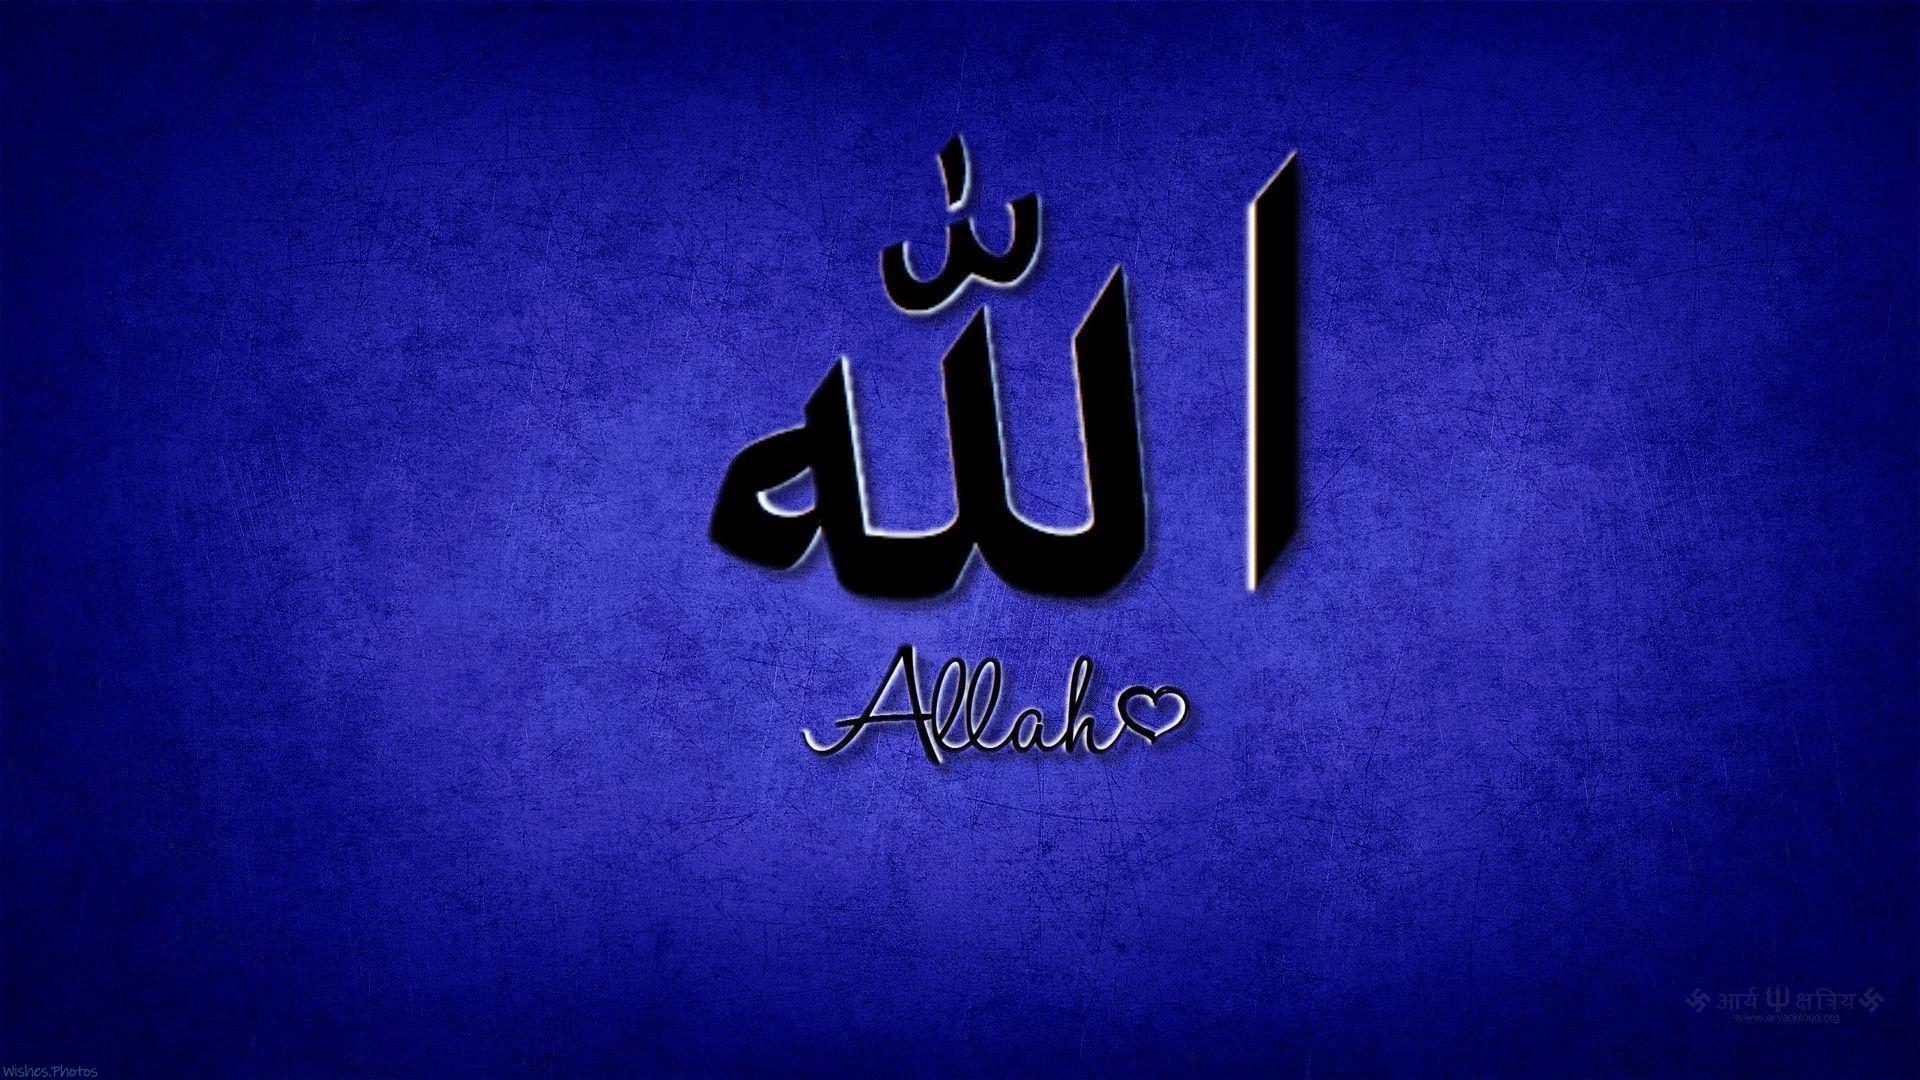 Allah Name Images, Pics, Photos, Gifs Free Download